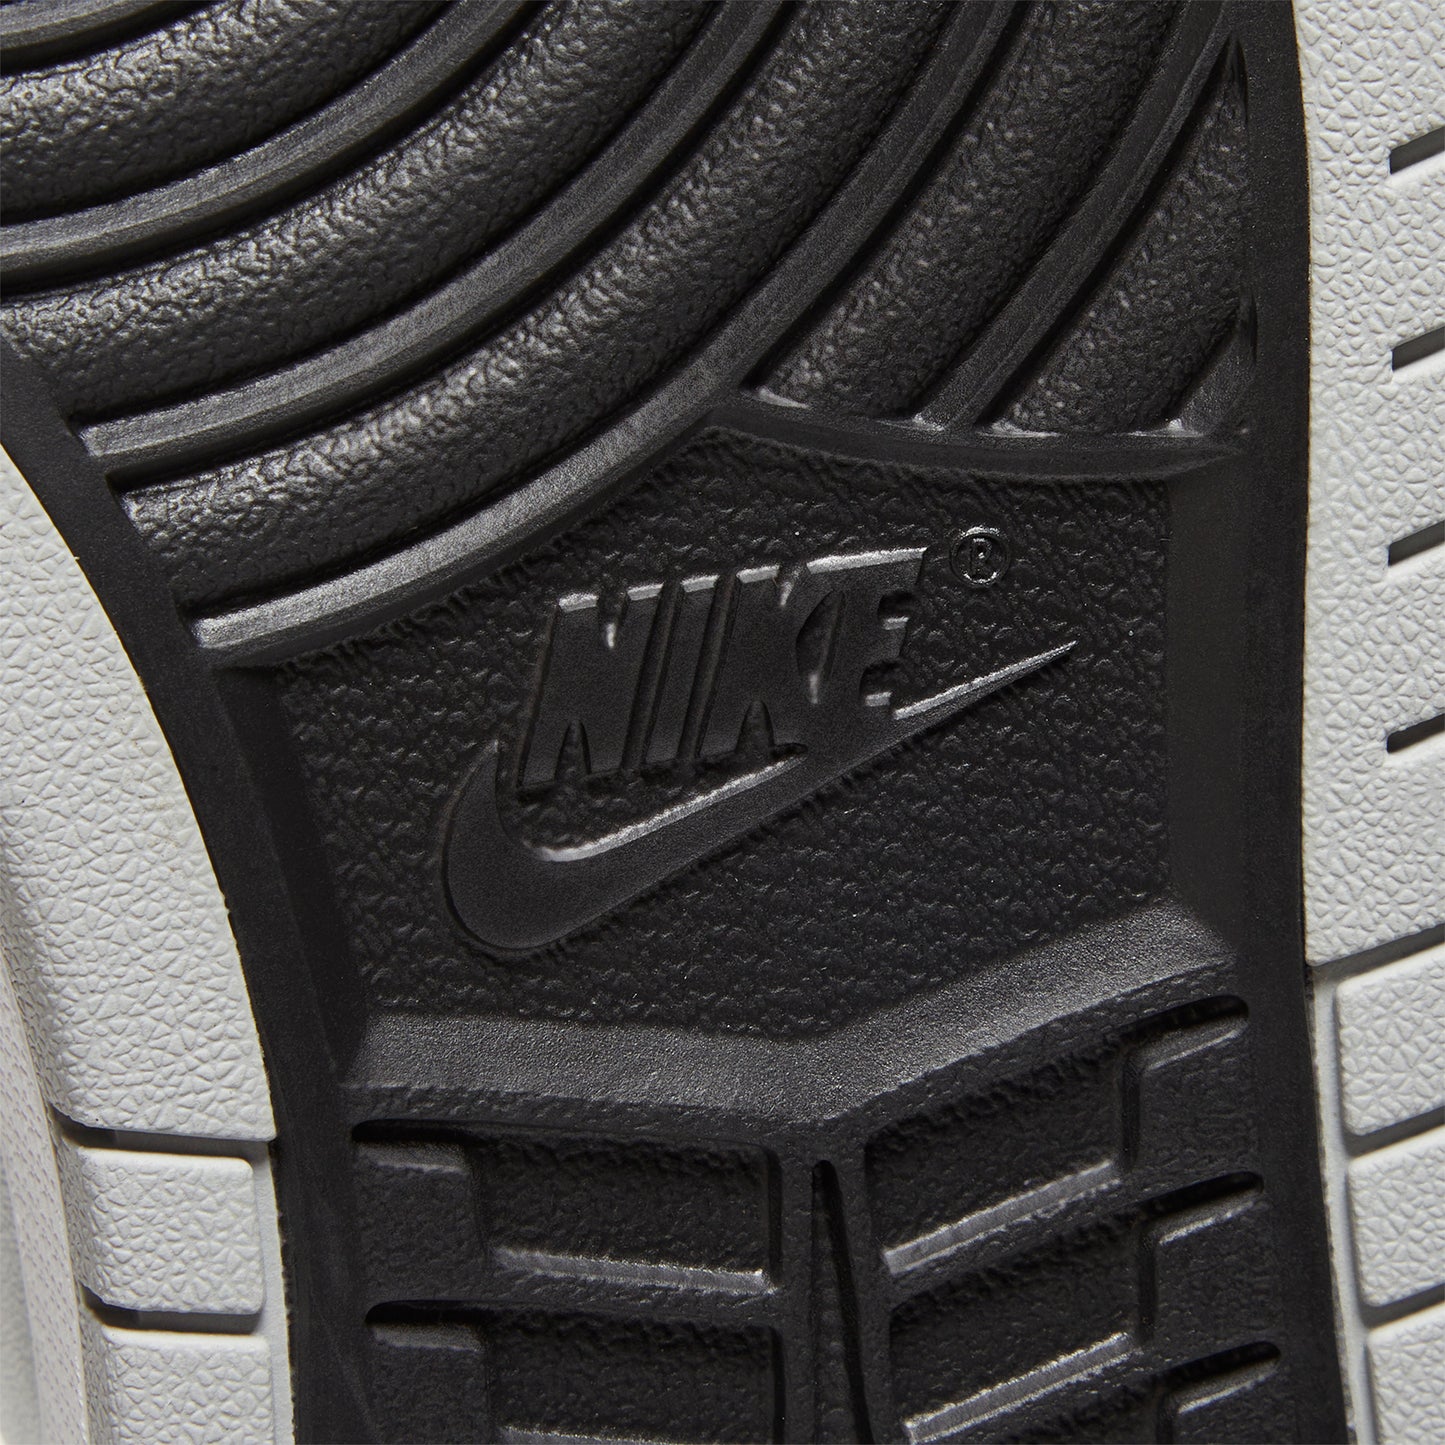 Nike Air Jordan 1 Zoom CMFT (Black/White/Light Smoke Grey)